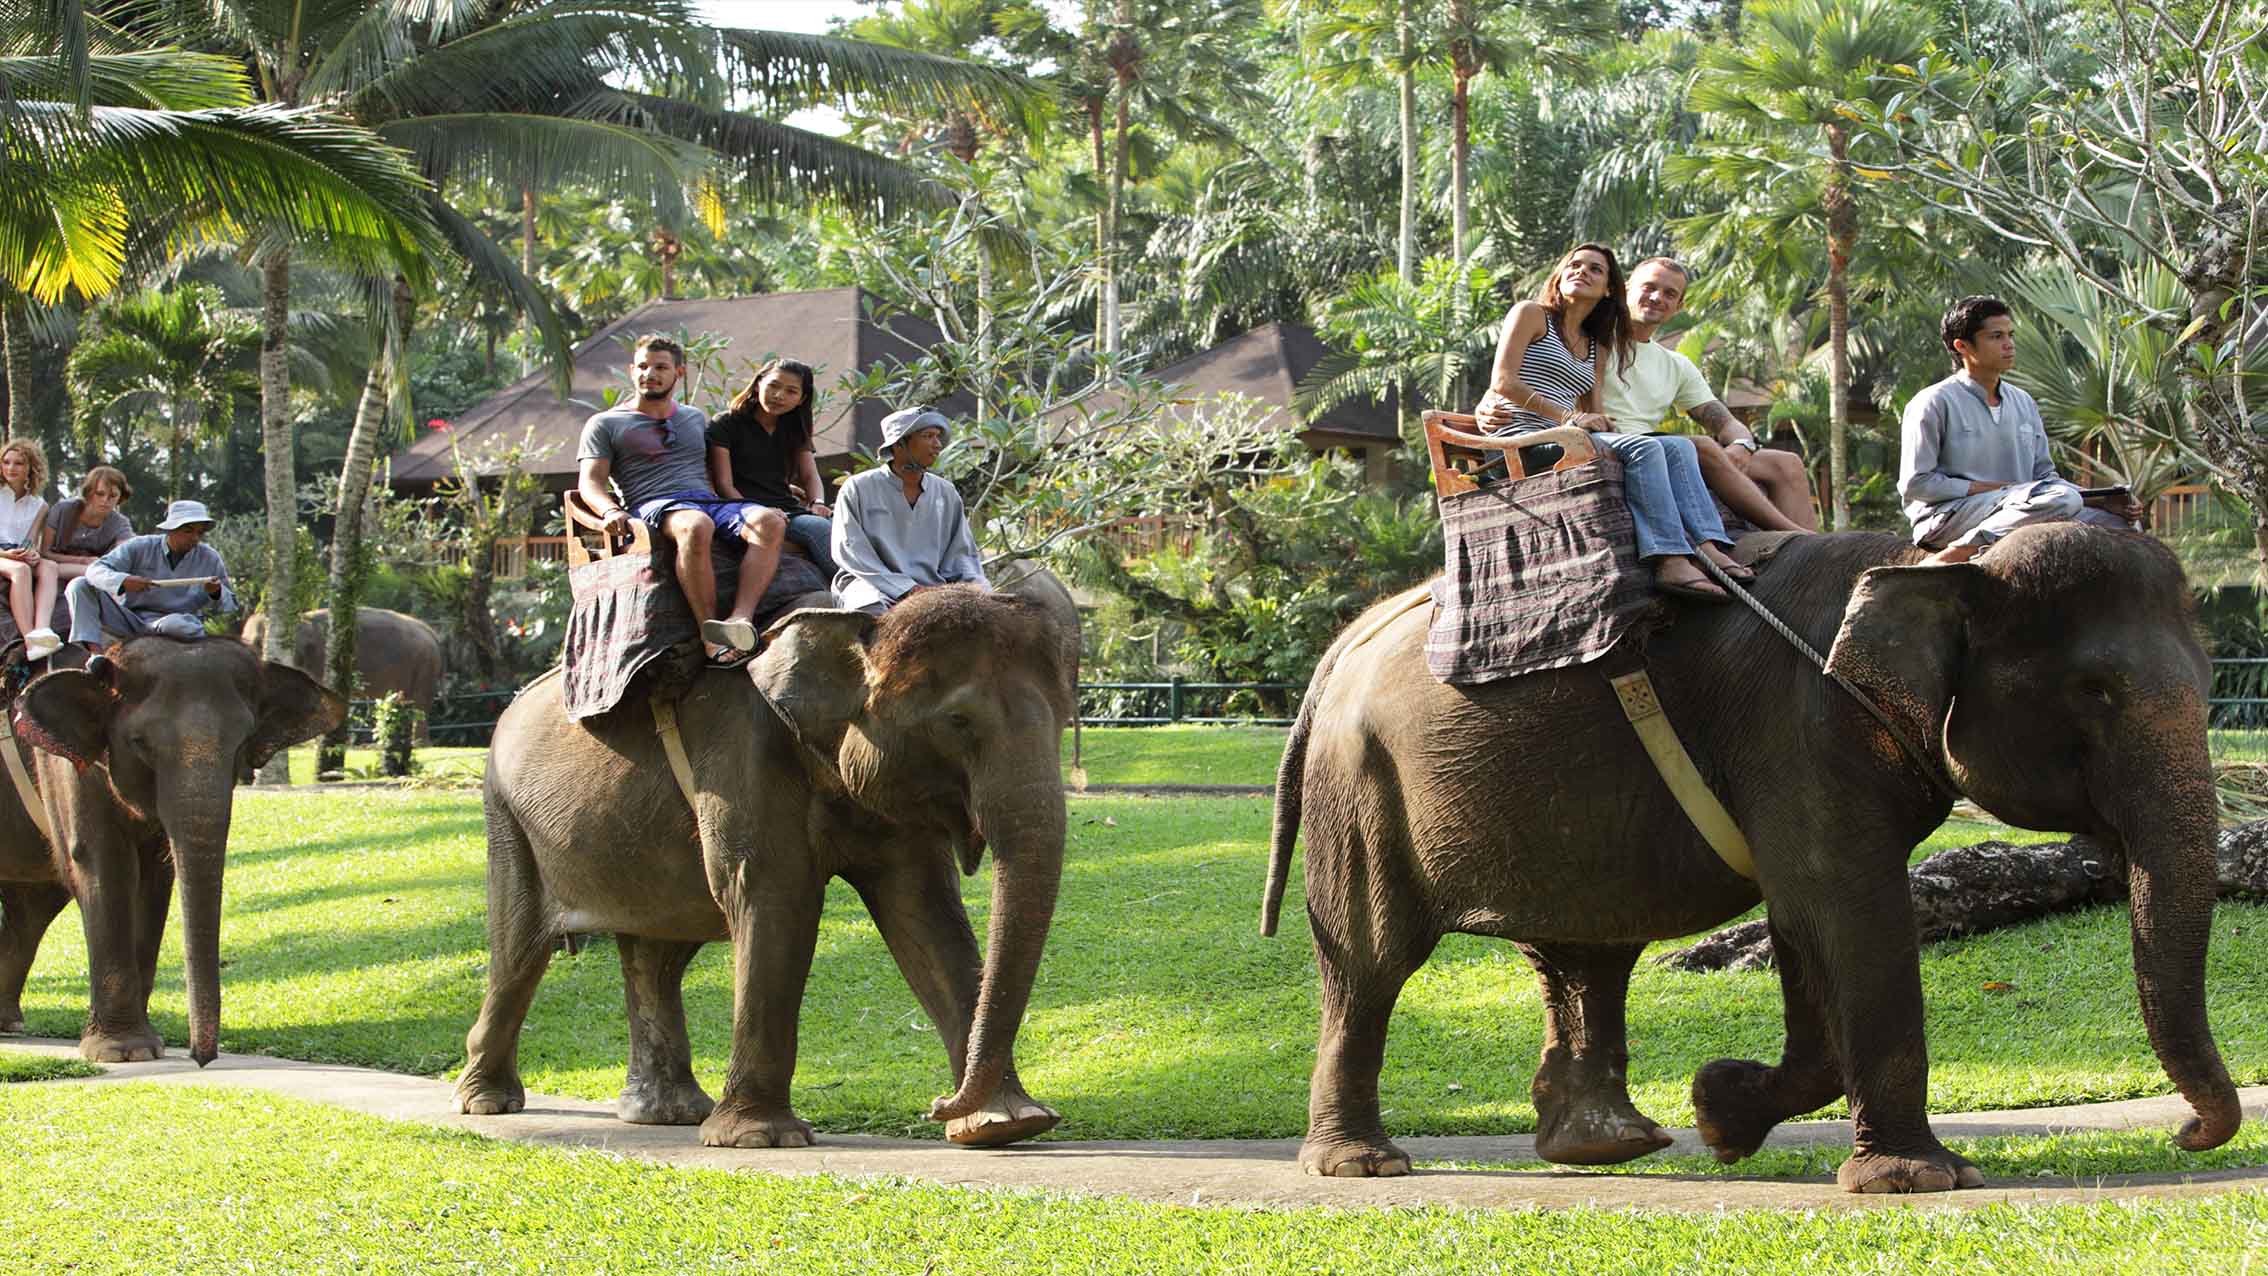 bali elephant ride, bali, elephant, safari, ride, bali elephant, elephant safari, bali elephant safari, elephant safari ride, elephant ride safari